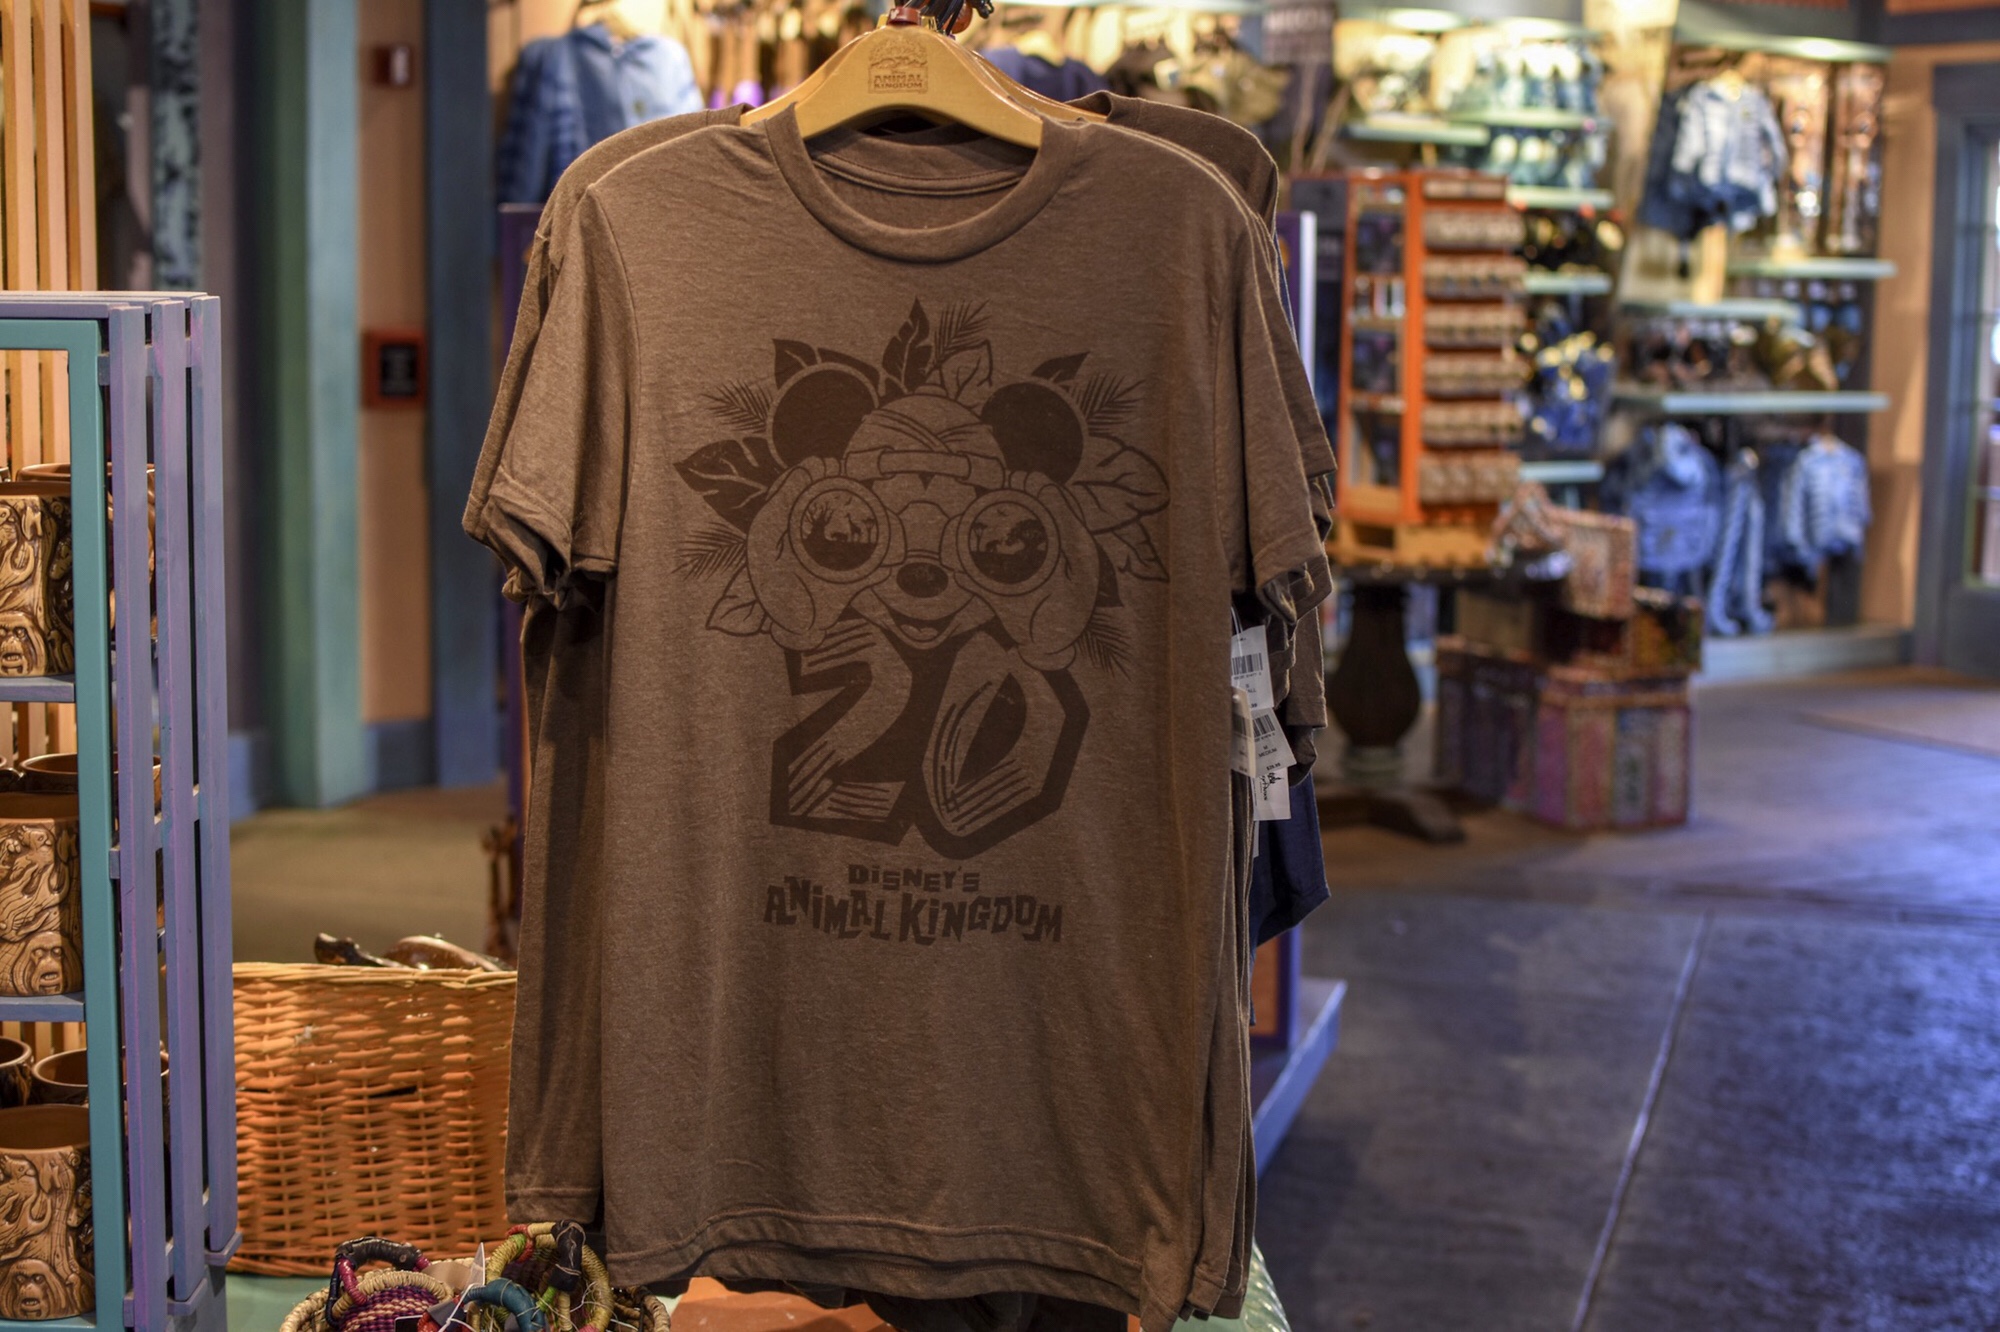 20th Anniversary Merchandise Arrives at Disney's Animal Kingdom